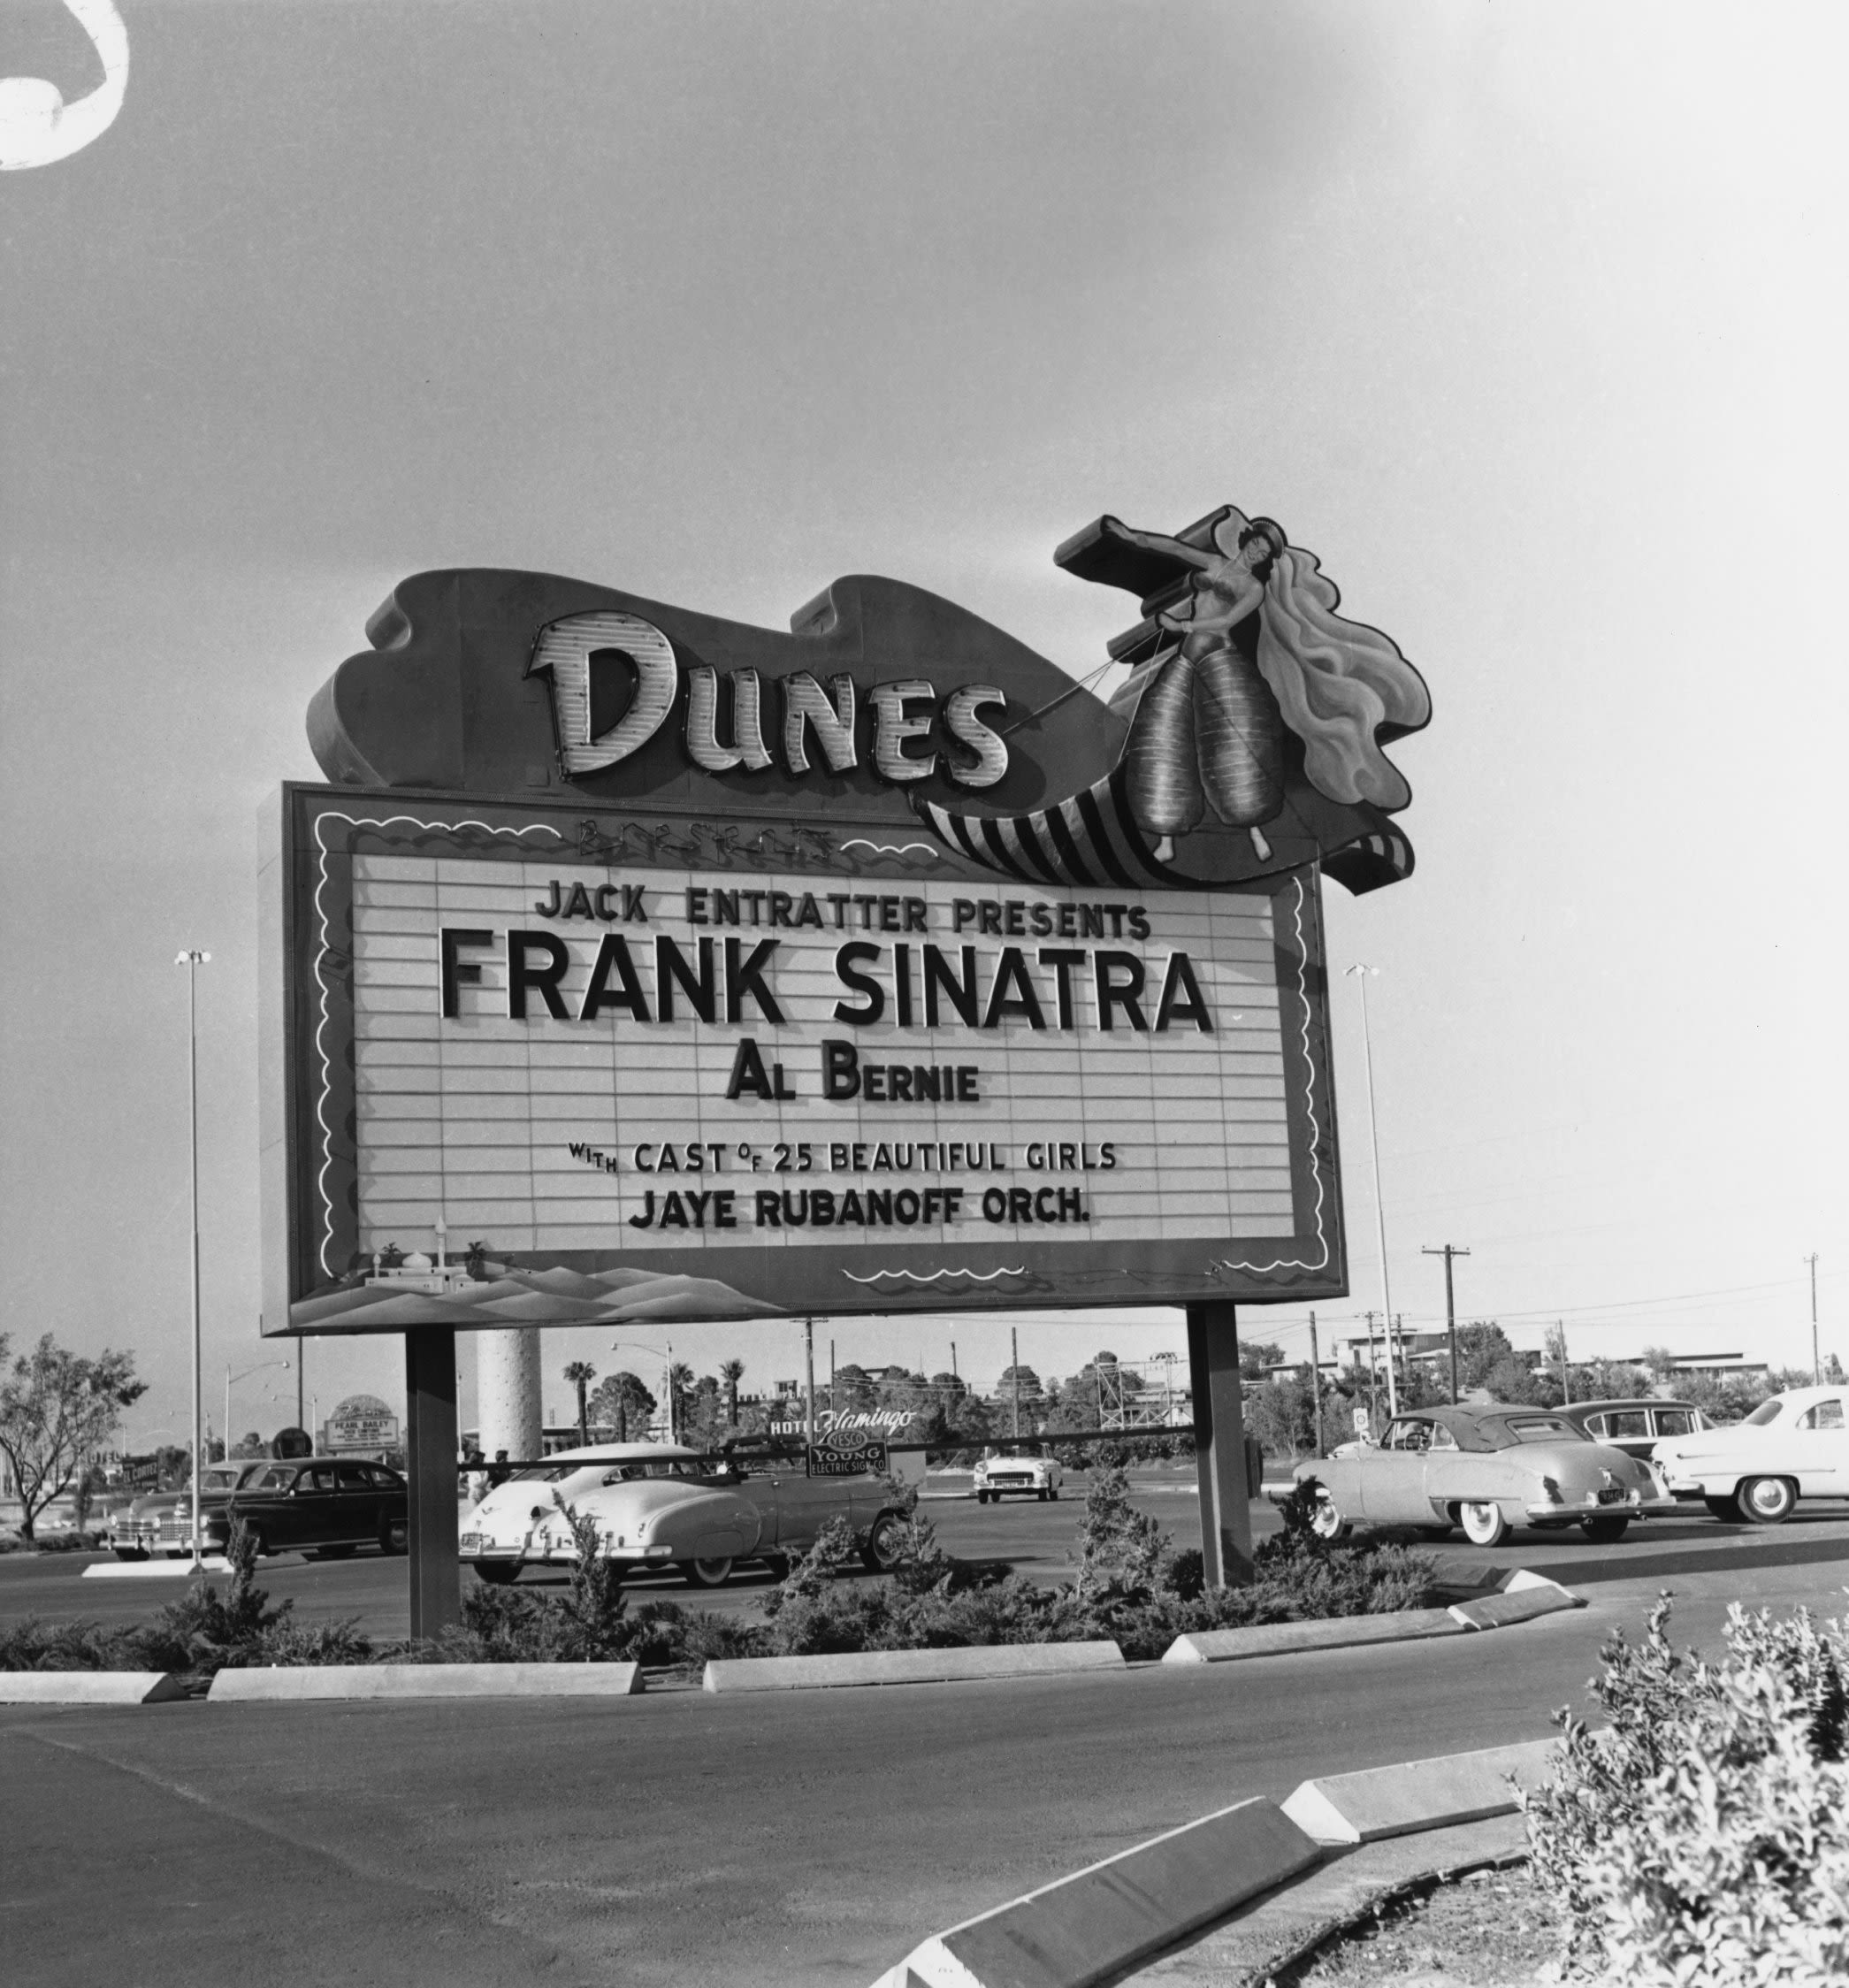 Riviera Hotel & Casino, Las Vegas, circa 1955